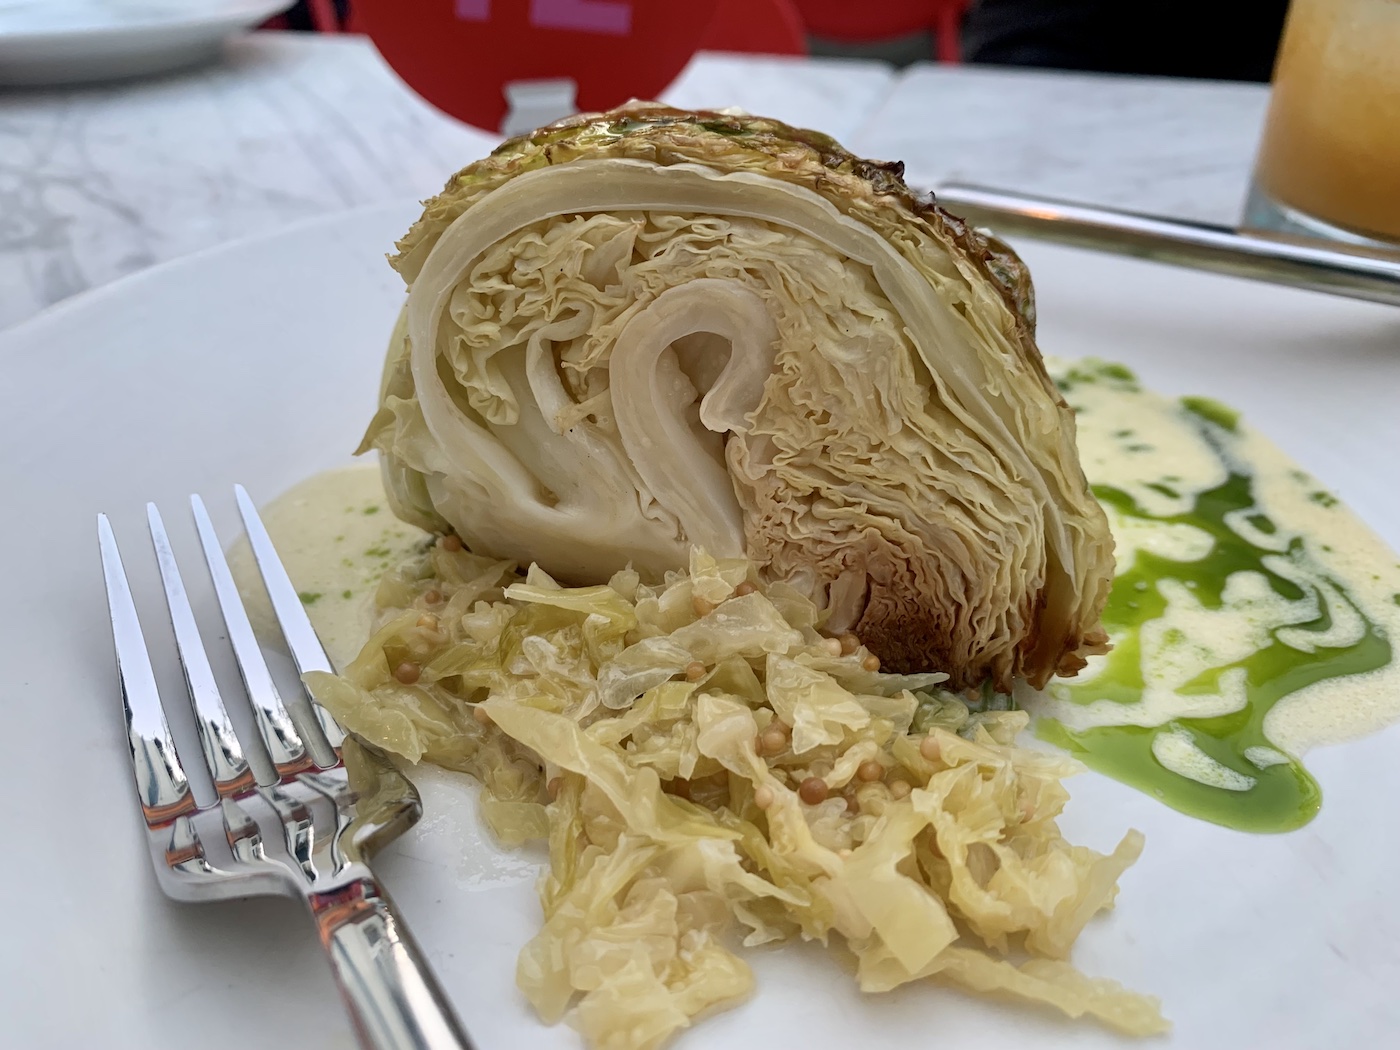 cabbage atop sauerkraut, a fork and craime fraiche.